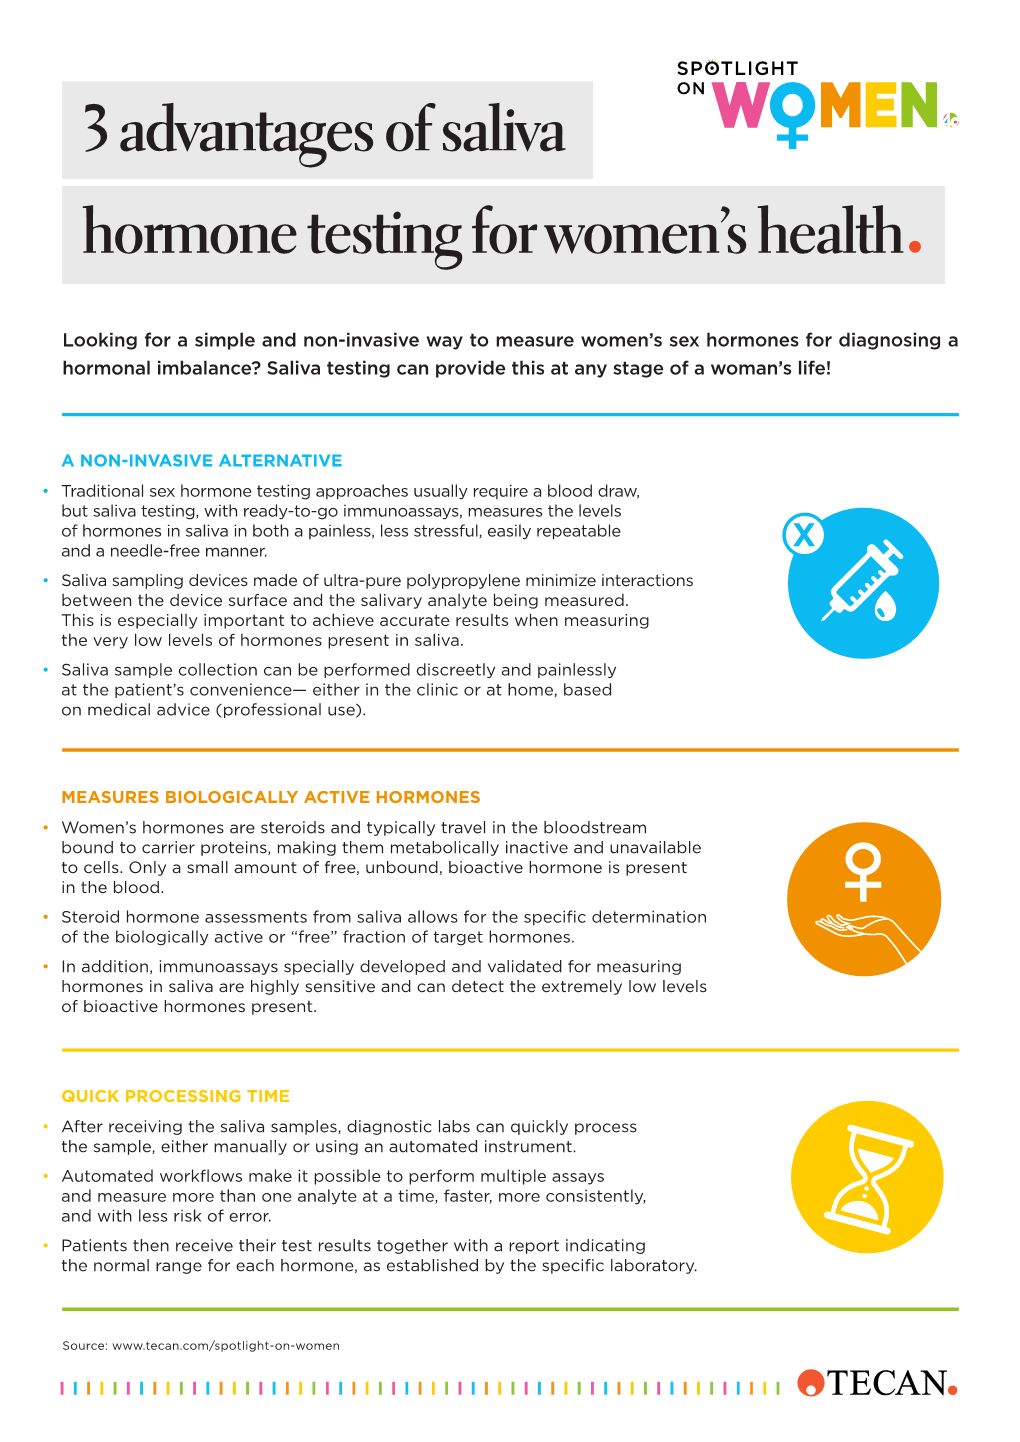 3 Advantages of Saliva Hormone Testing for Women's Health